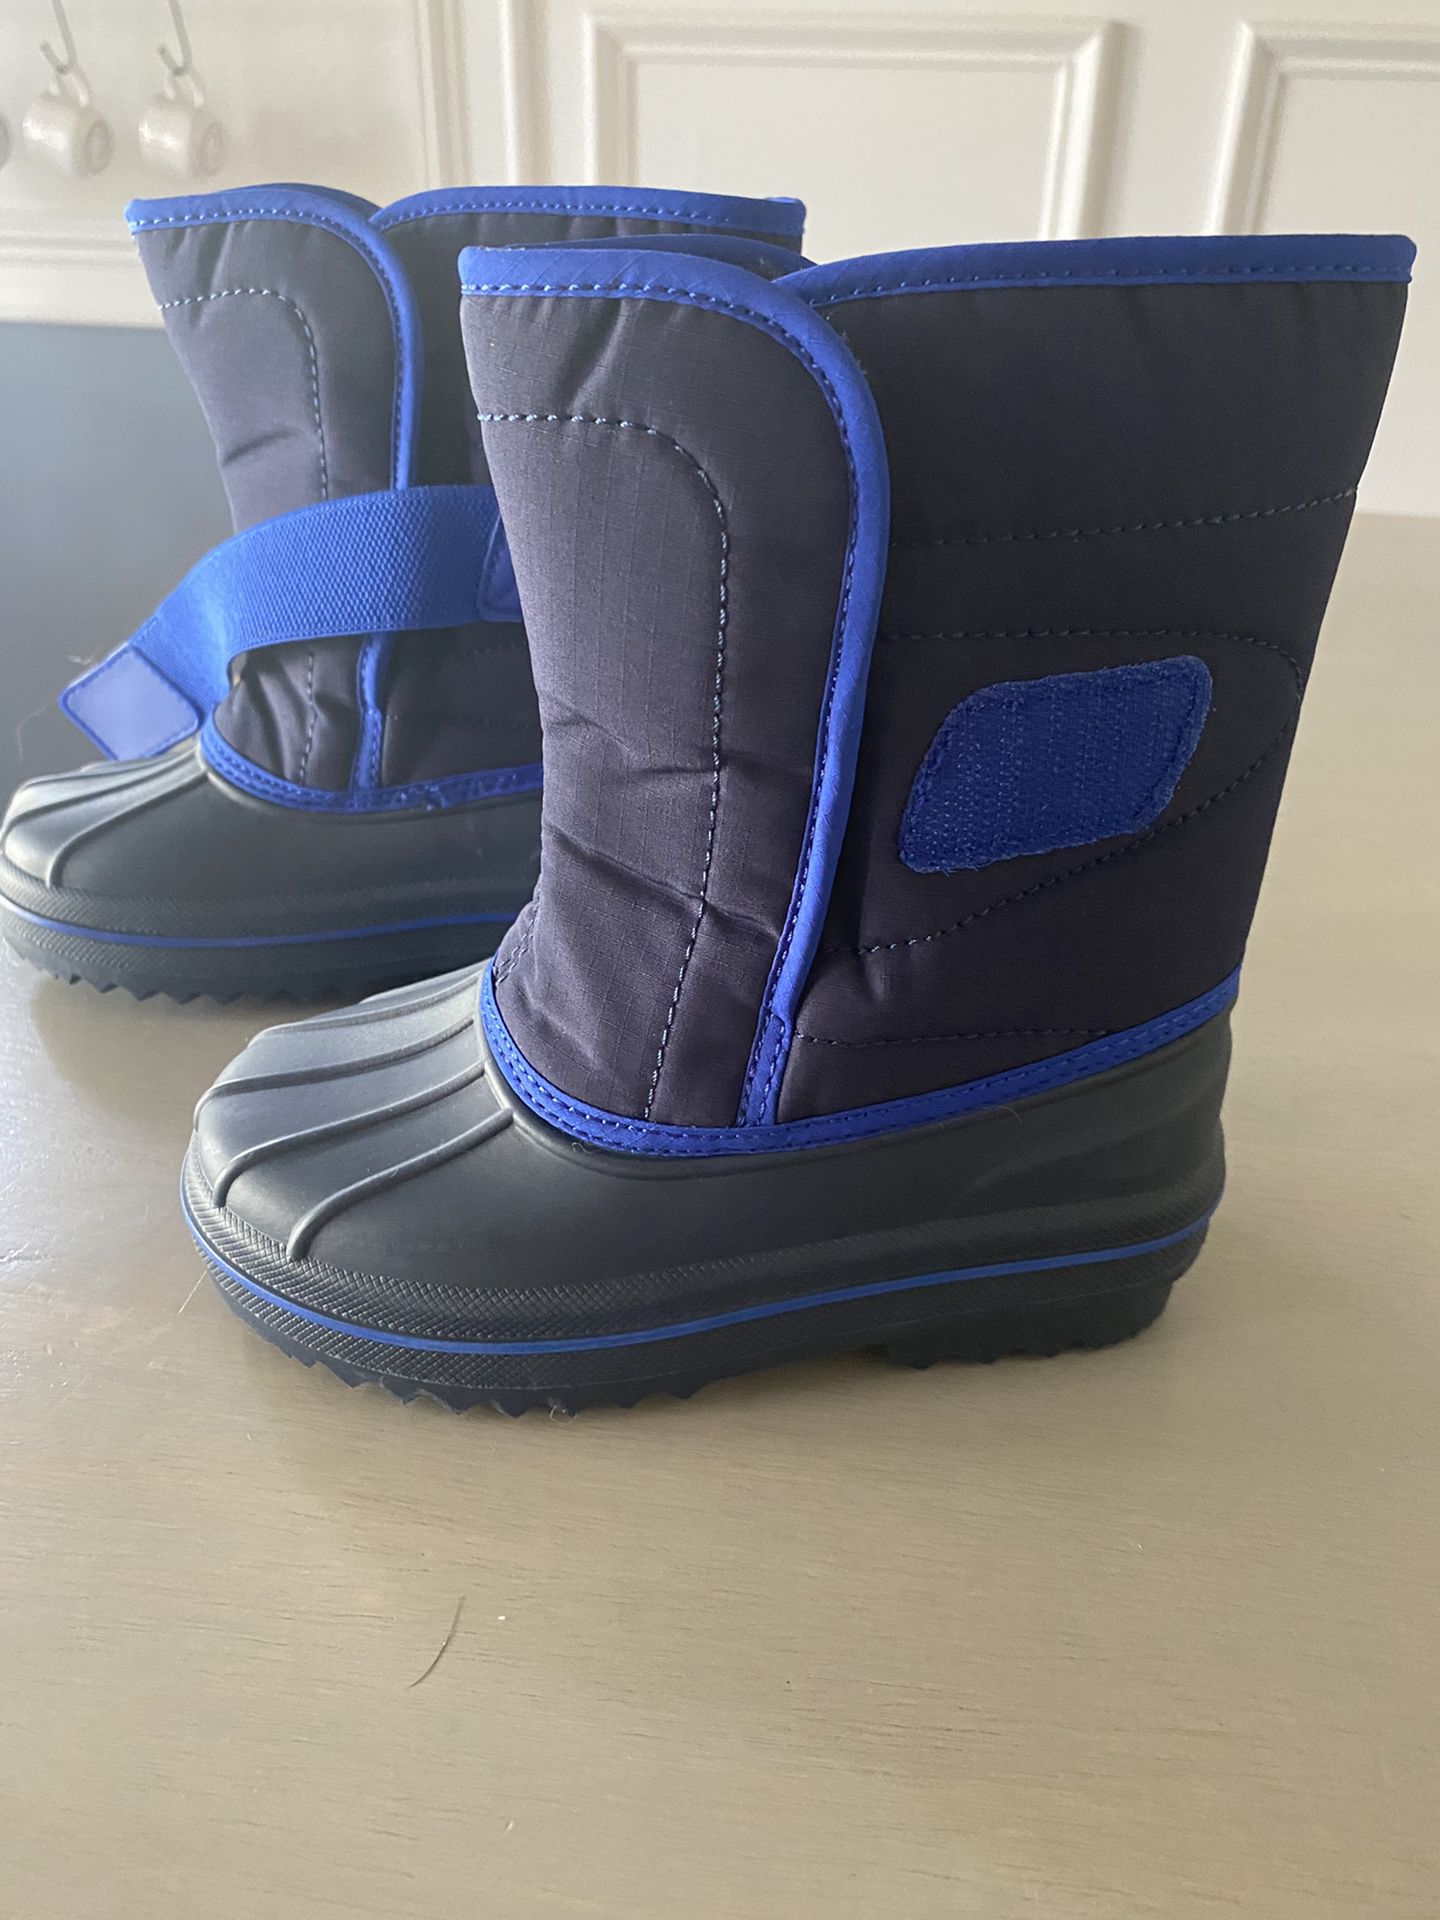 Toddler Snow Boots SZ 9